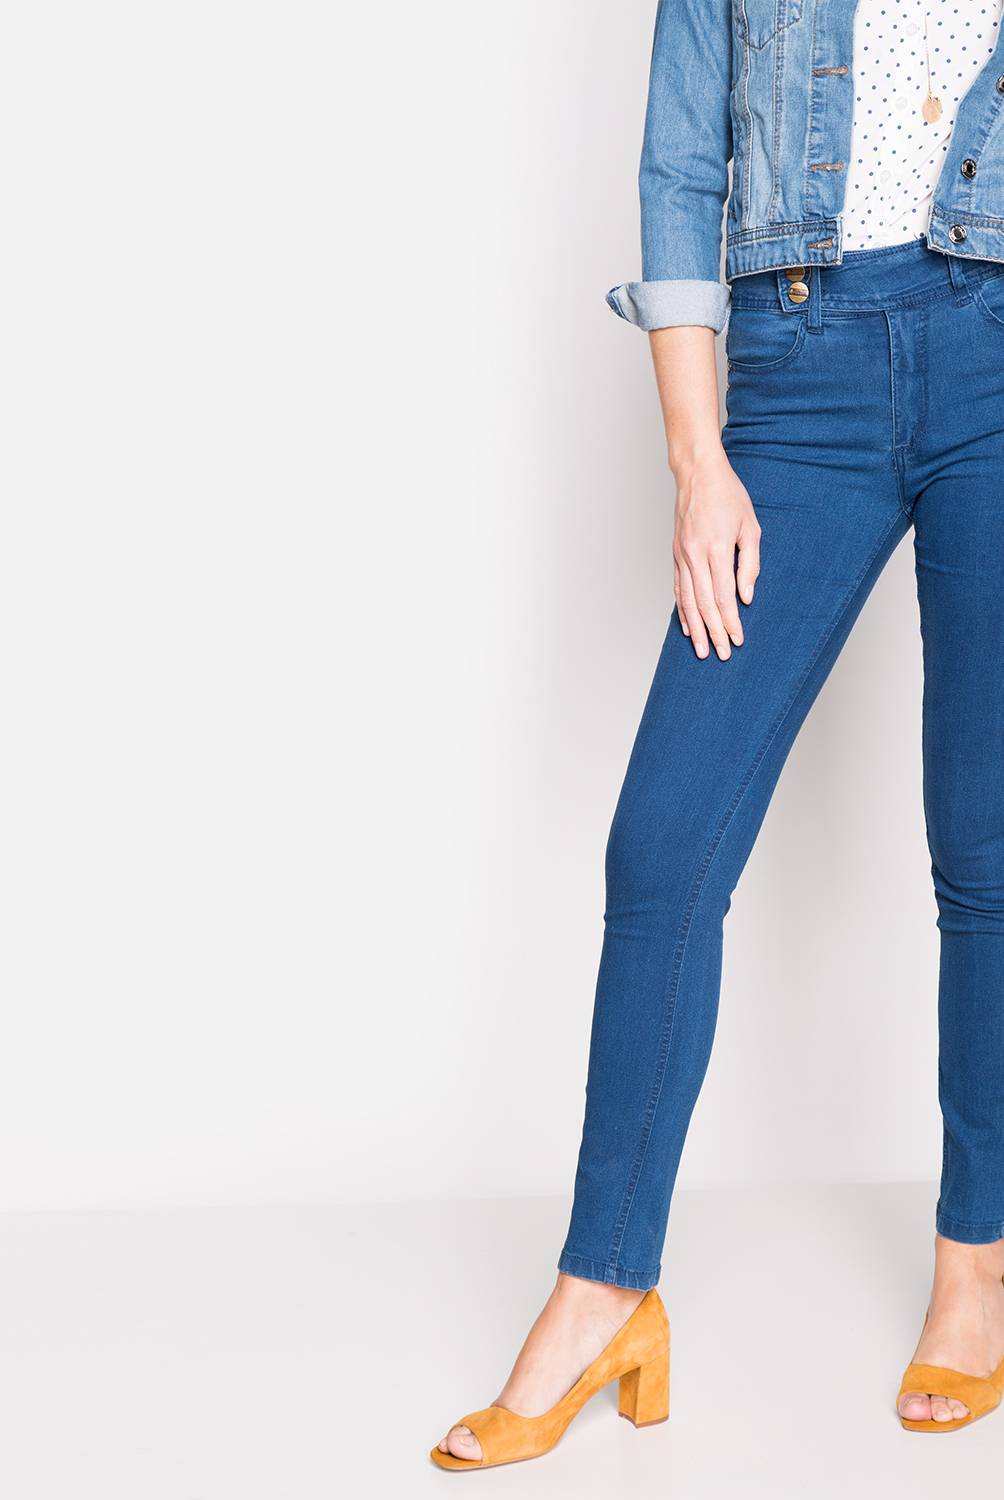 NEWPORT - Newport Jeans Recto Tiro Denim Alto Mujer